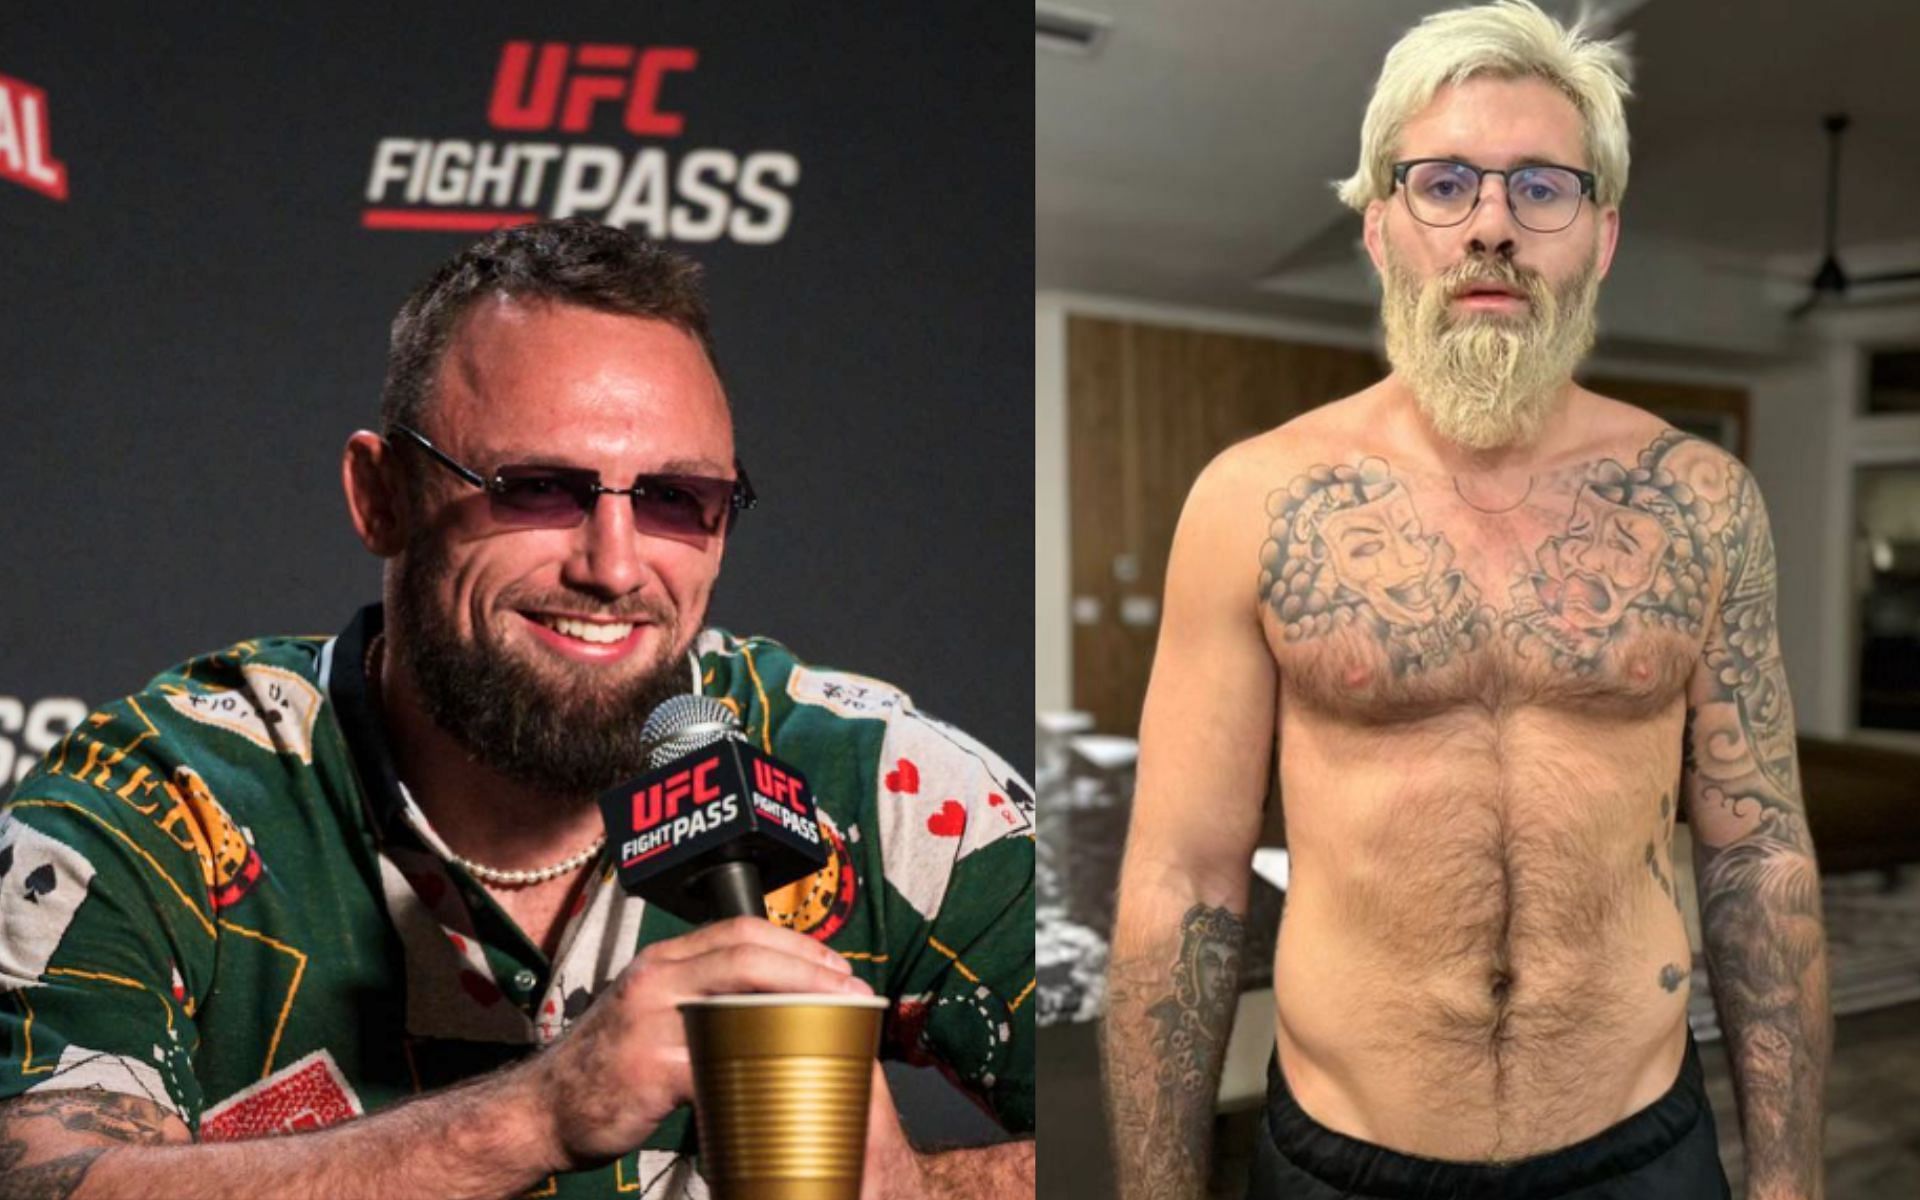 Craig Jones (left) trolls Gordon Ryan (right) with steroid-related advert online [Images Courtesy: @craigjonesbjj and @gordonlovesjiujitsu on Instagram]